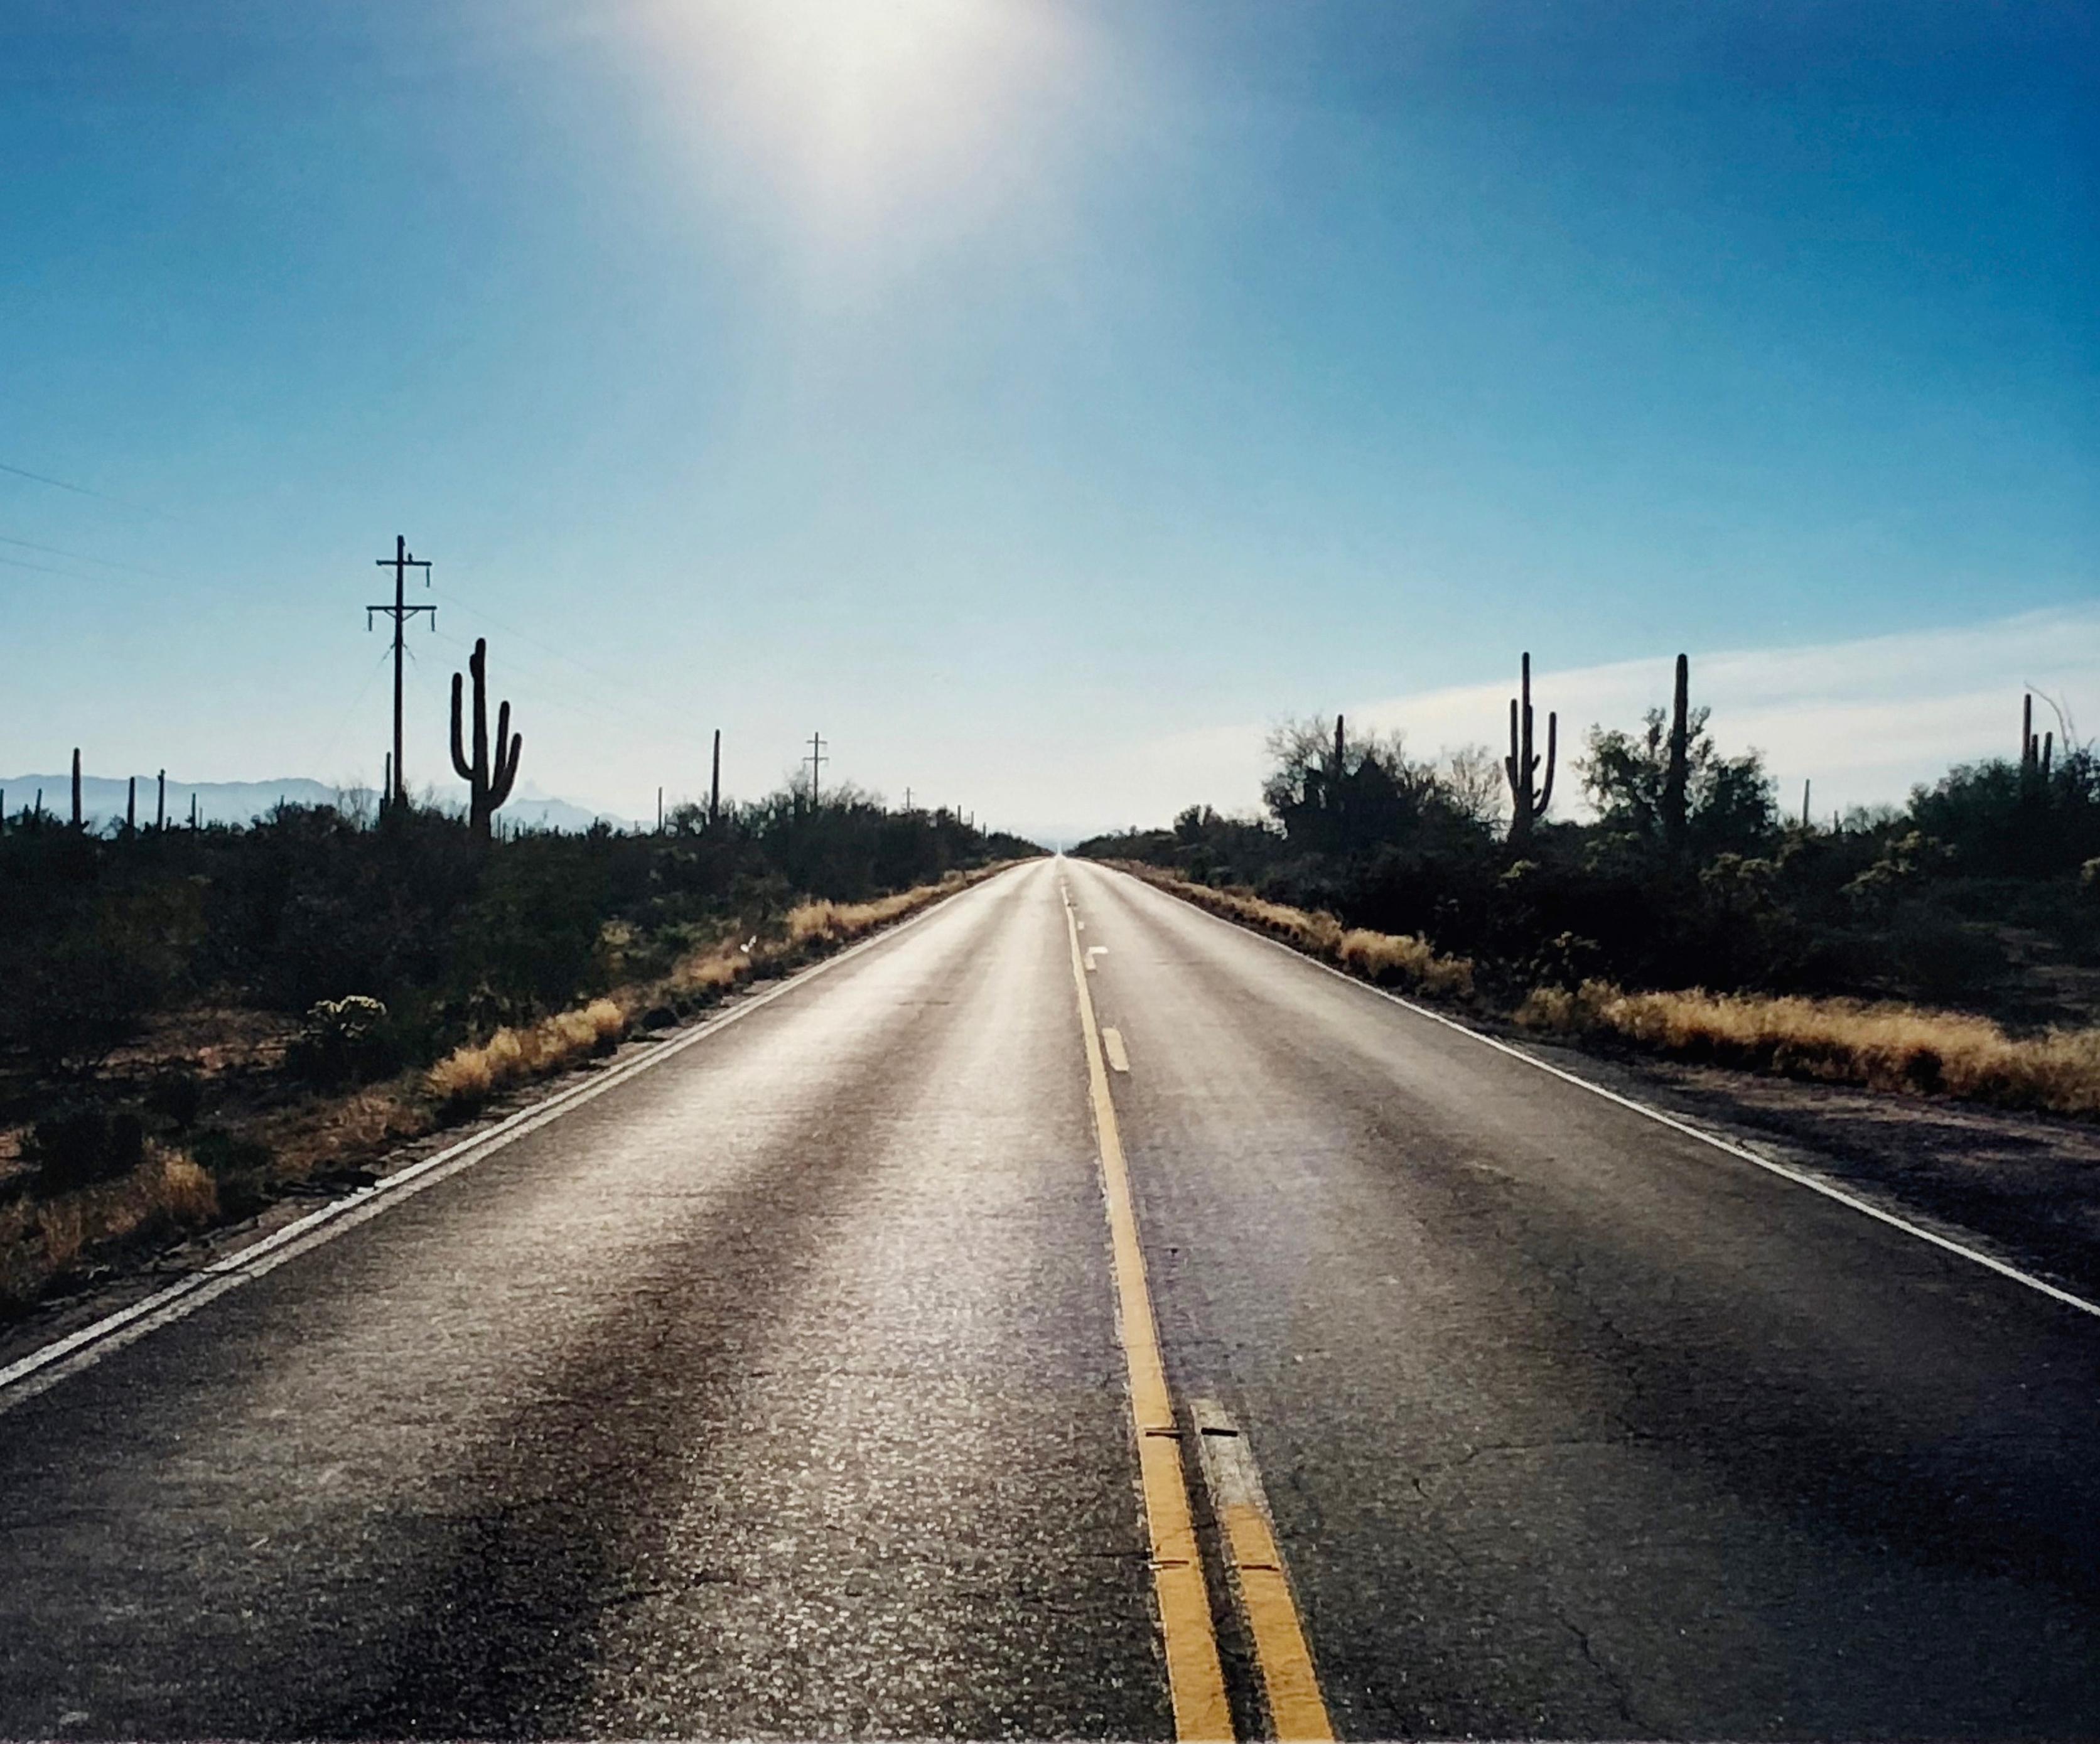 Richard Heeps Landscape Photograph - Road to Gunsight, Highway 86, Arizona - American landscape color photography